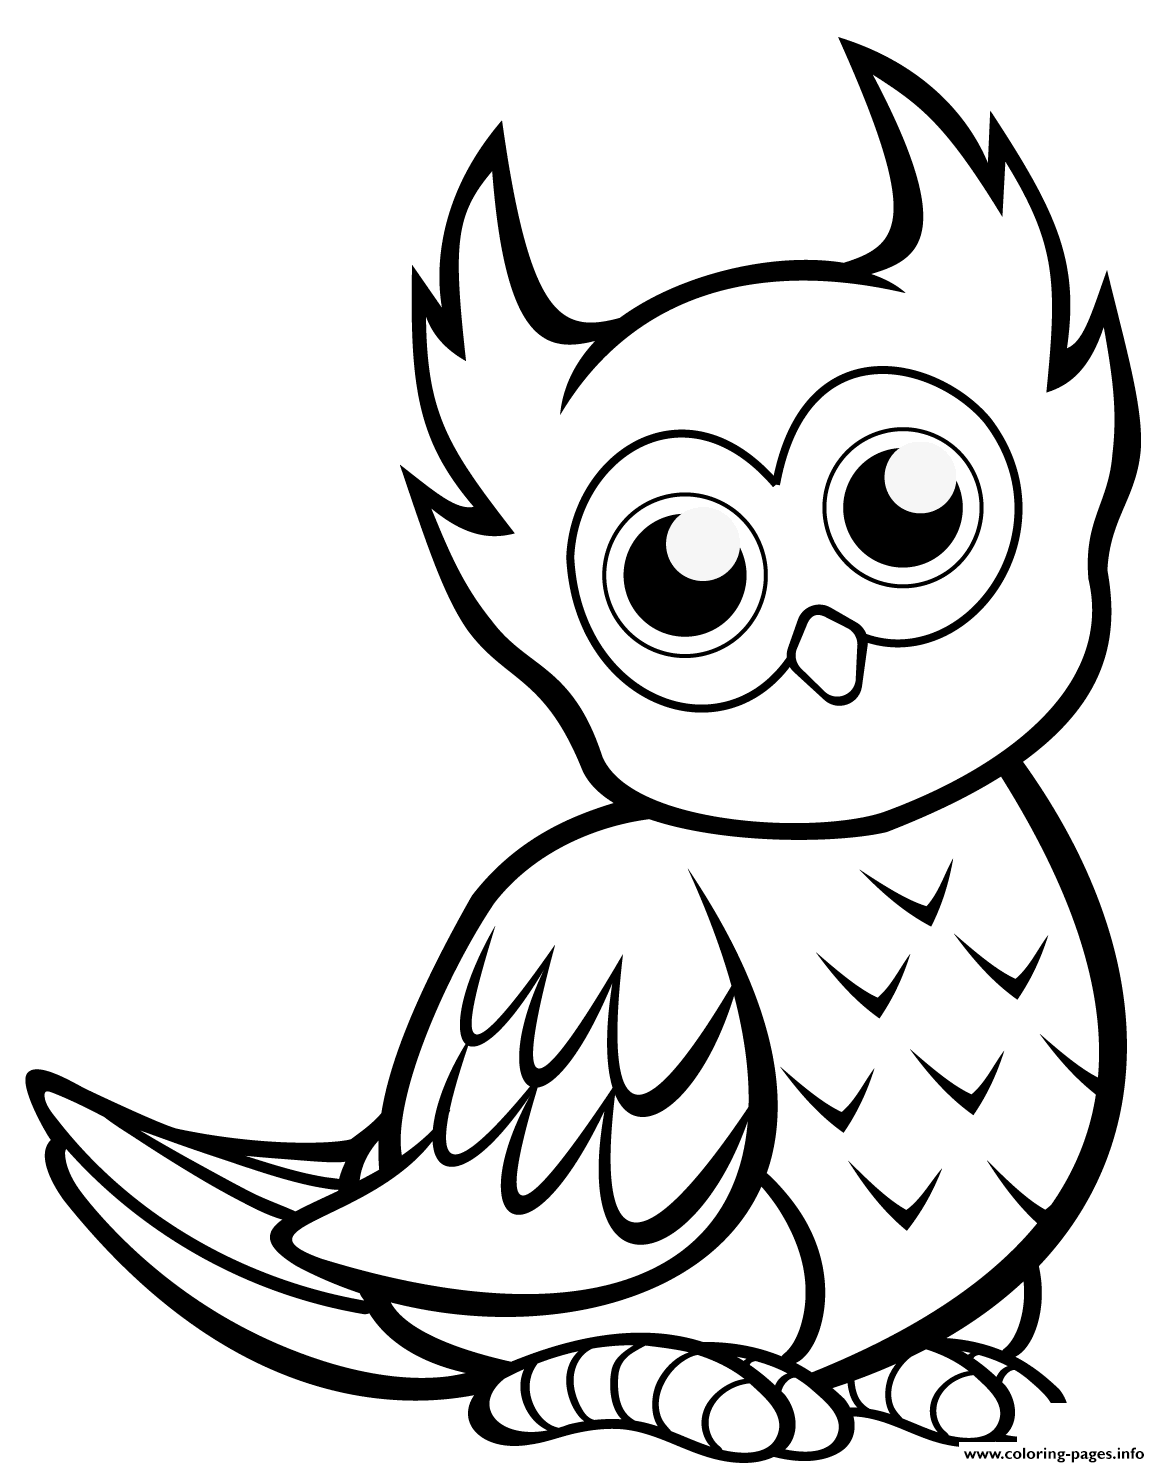 Cute Owl coloring